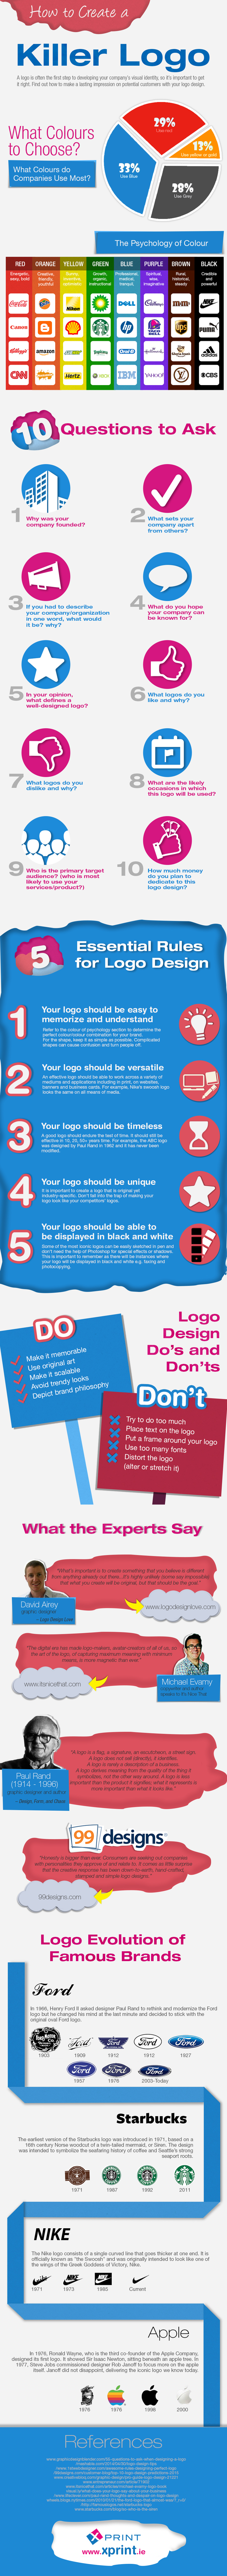 How to Create a Killer Logo